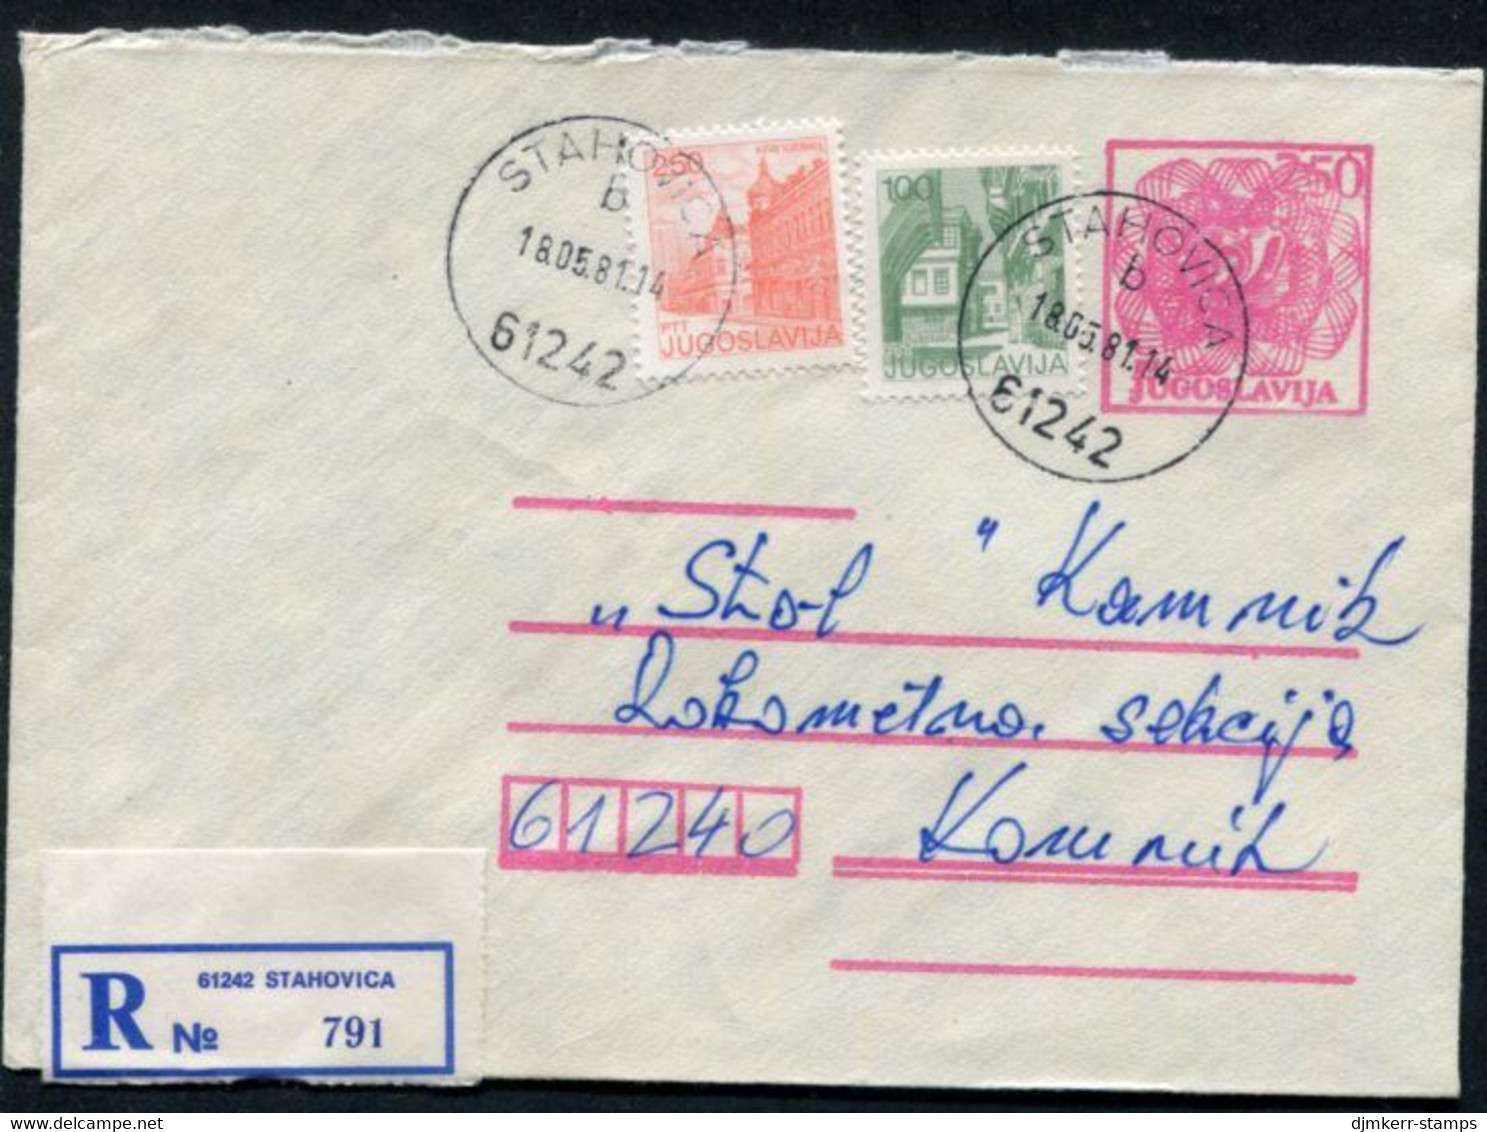 YUGOSLAVIA 1980 2,50 D. Postal Stationery Envelope Registered With Additional Stamps.  Michel U88 7II - Postal Stationery